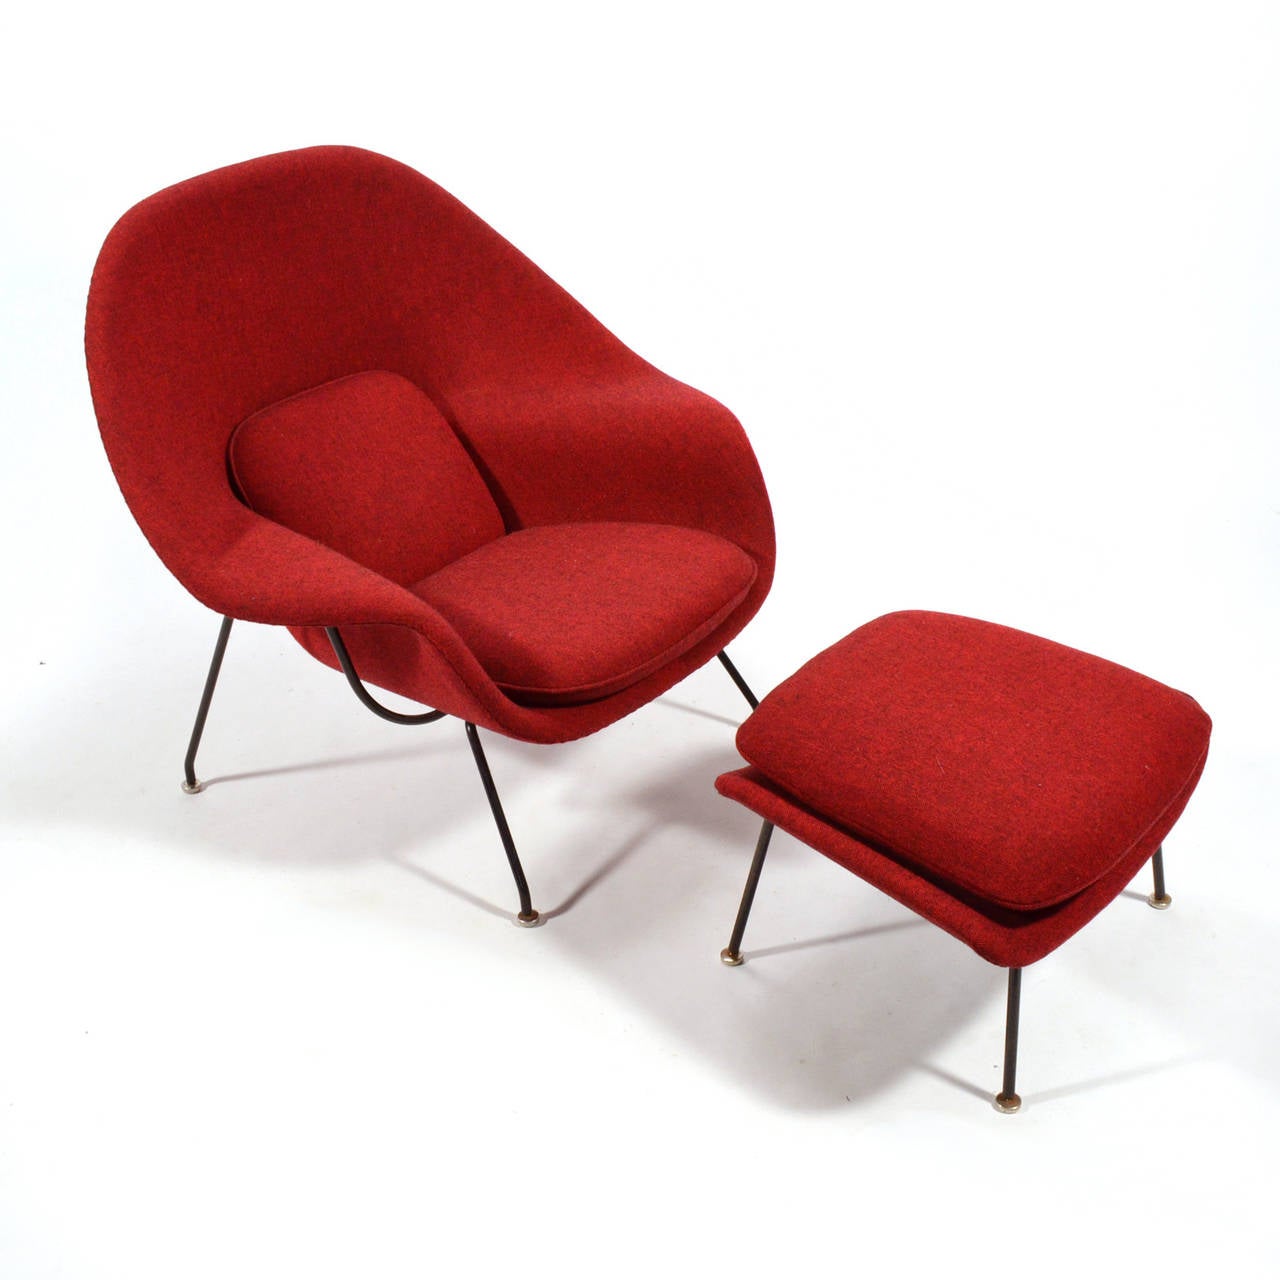 Steel Eero Saarinen Womb Chair and Ottoman Upholstered in Alexander Girard Fabric